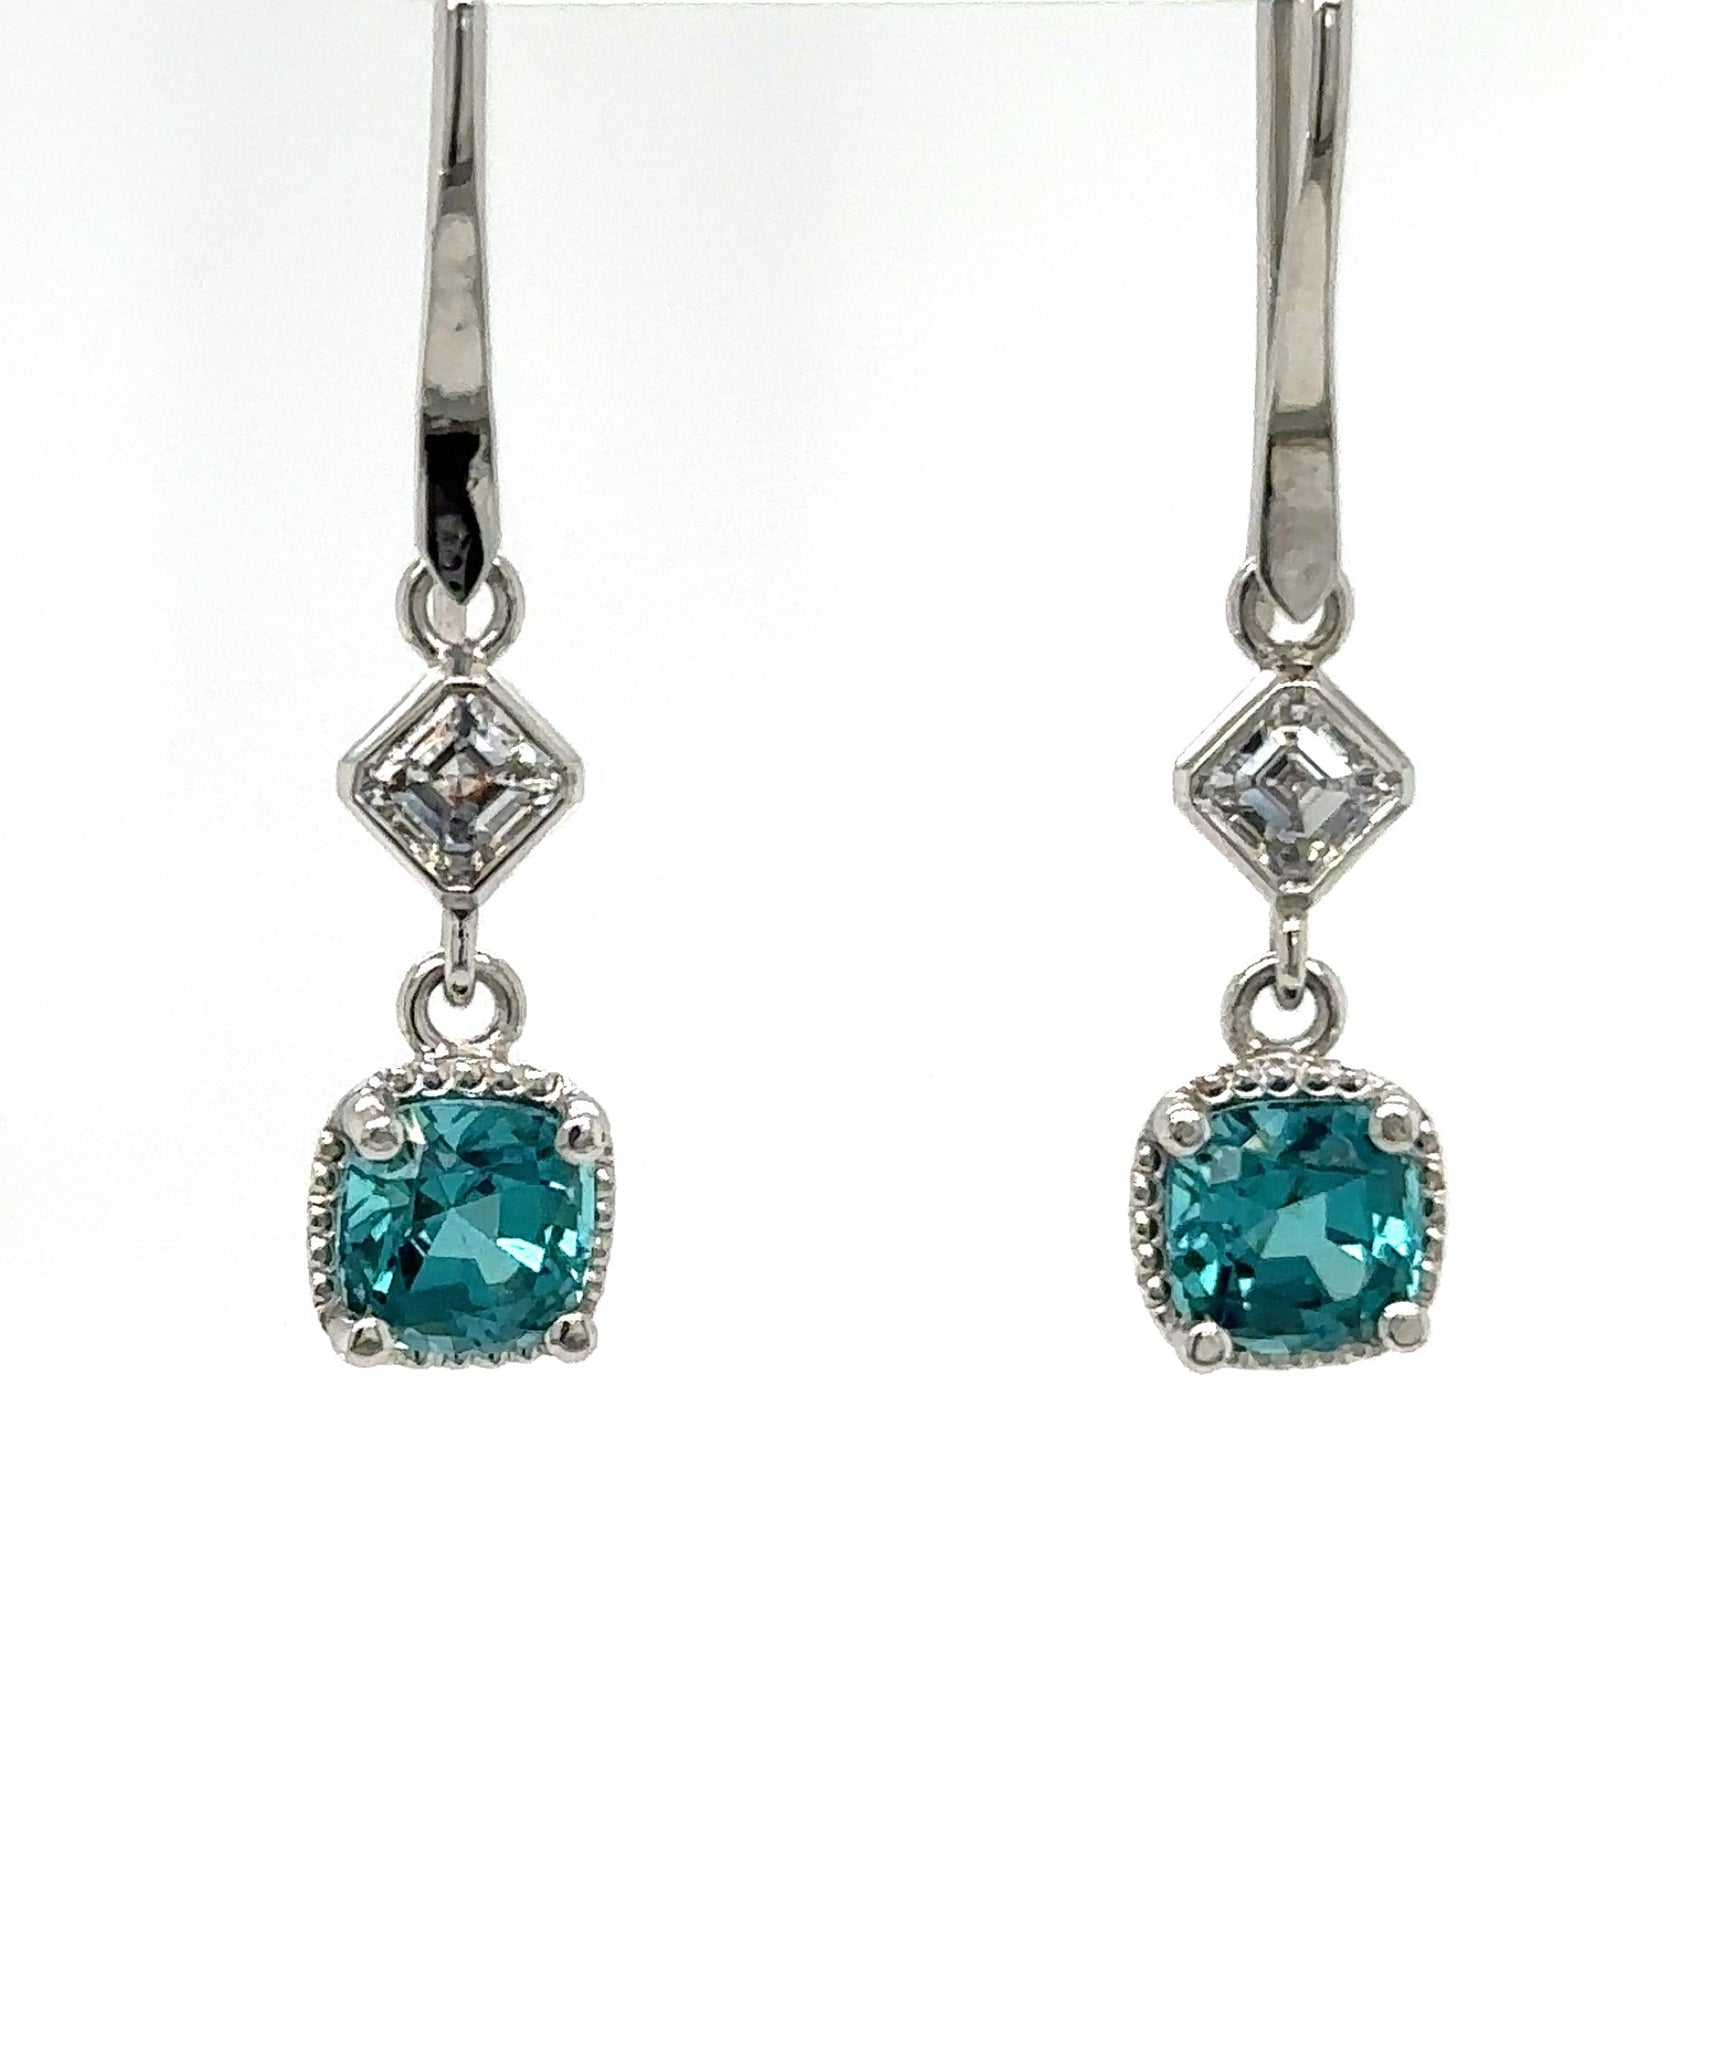 Diamond and Tourmaline earrings